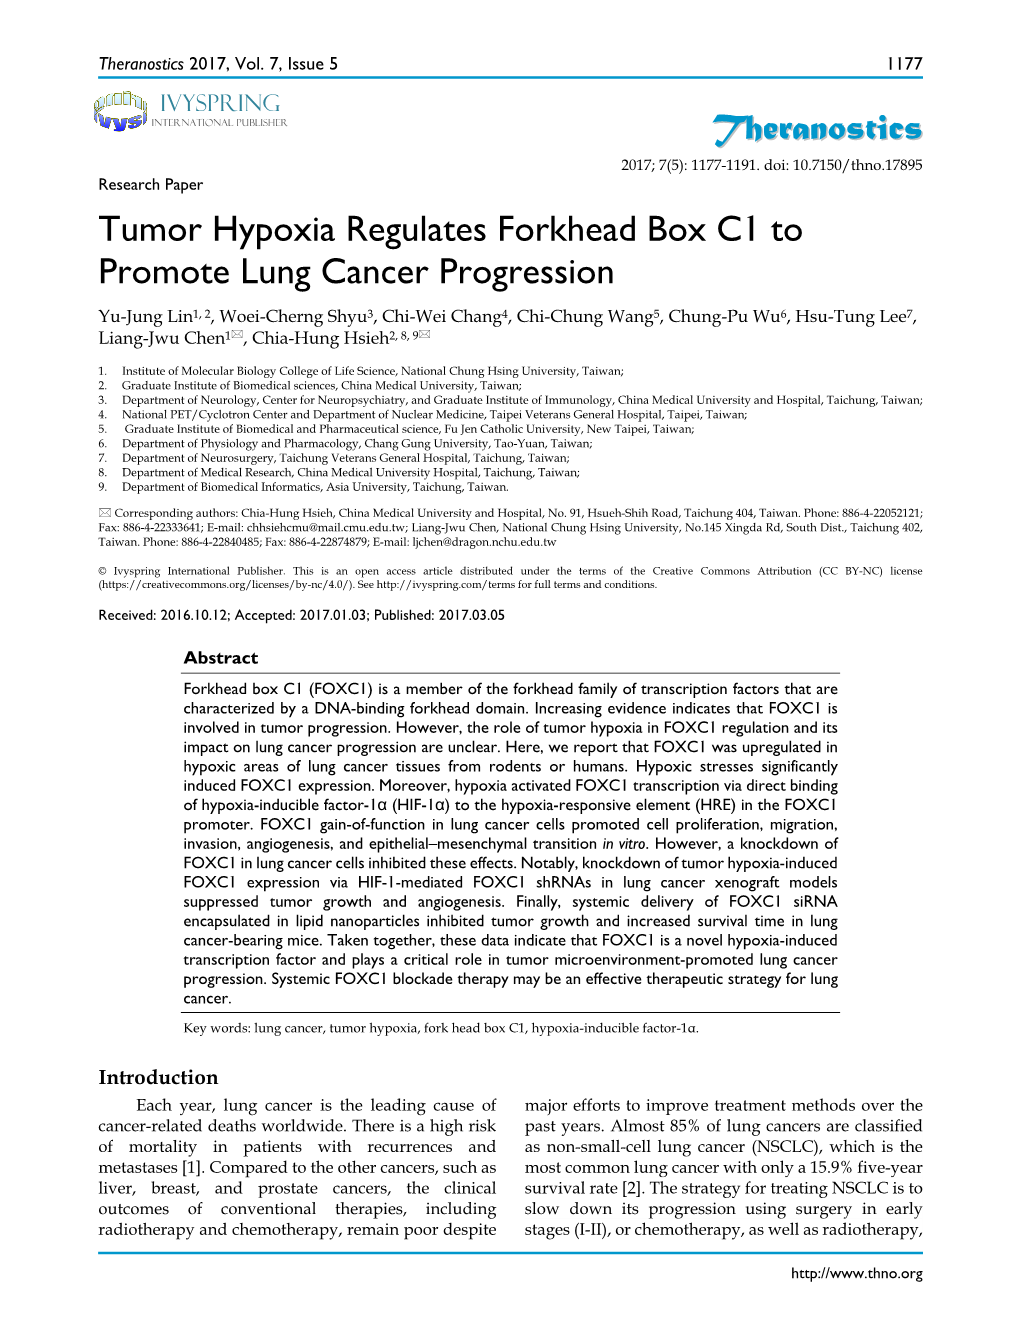 Tumor Hypoxia Regulates Forkhead Box C1 to Promote Lung Cancer Progression